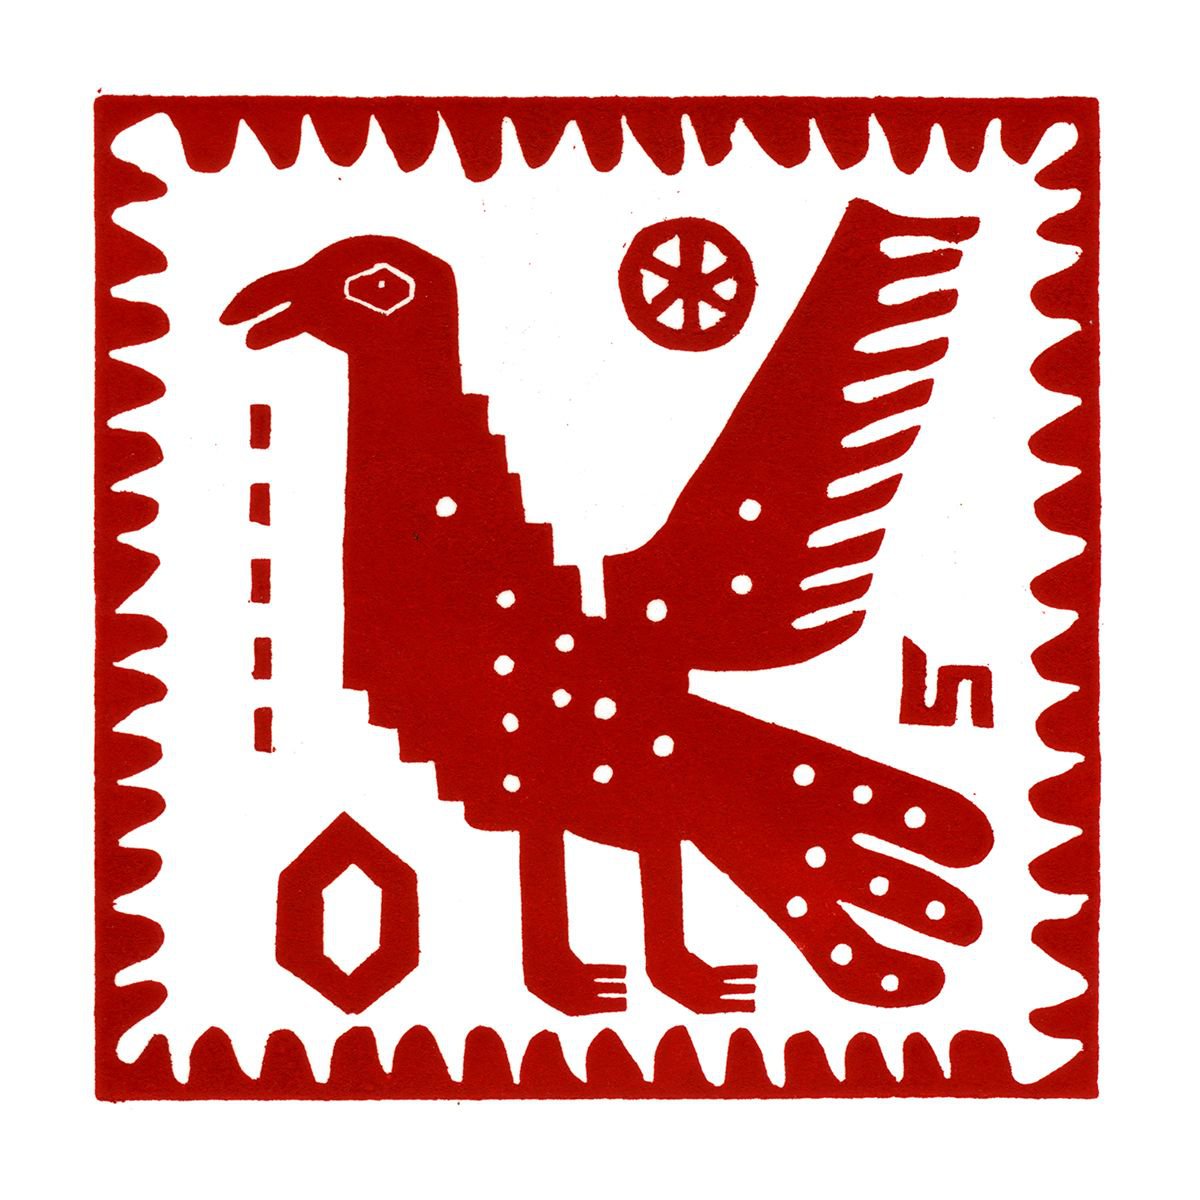 Peru Standing Bird Linocut Hand Pulled Original Relief Print Edition of 30 by Catherine Cronin